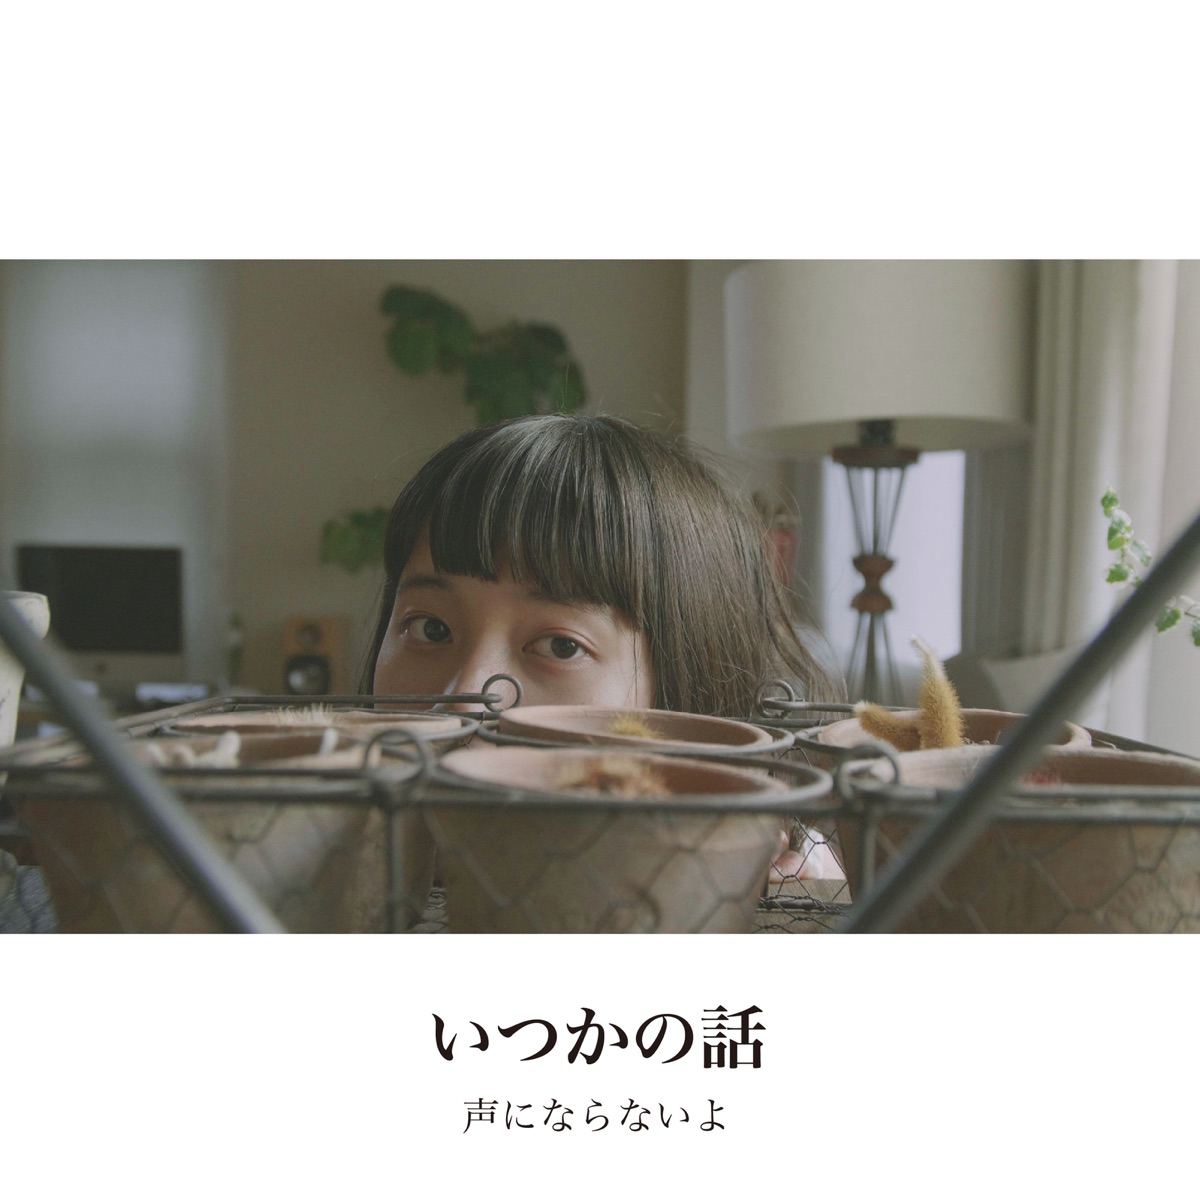 Koeninaranaiyo - Your Song Cover